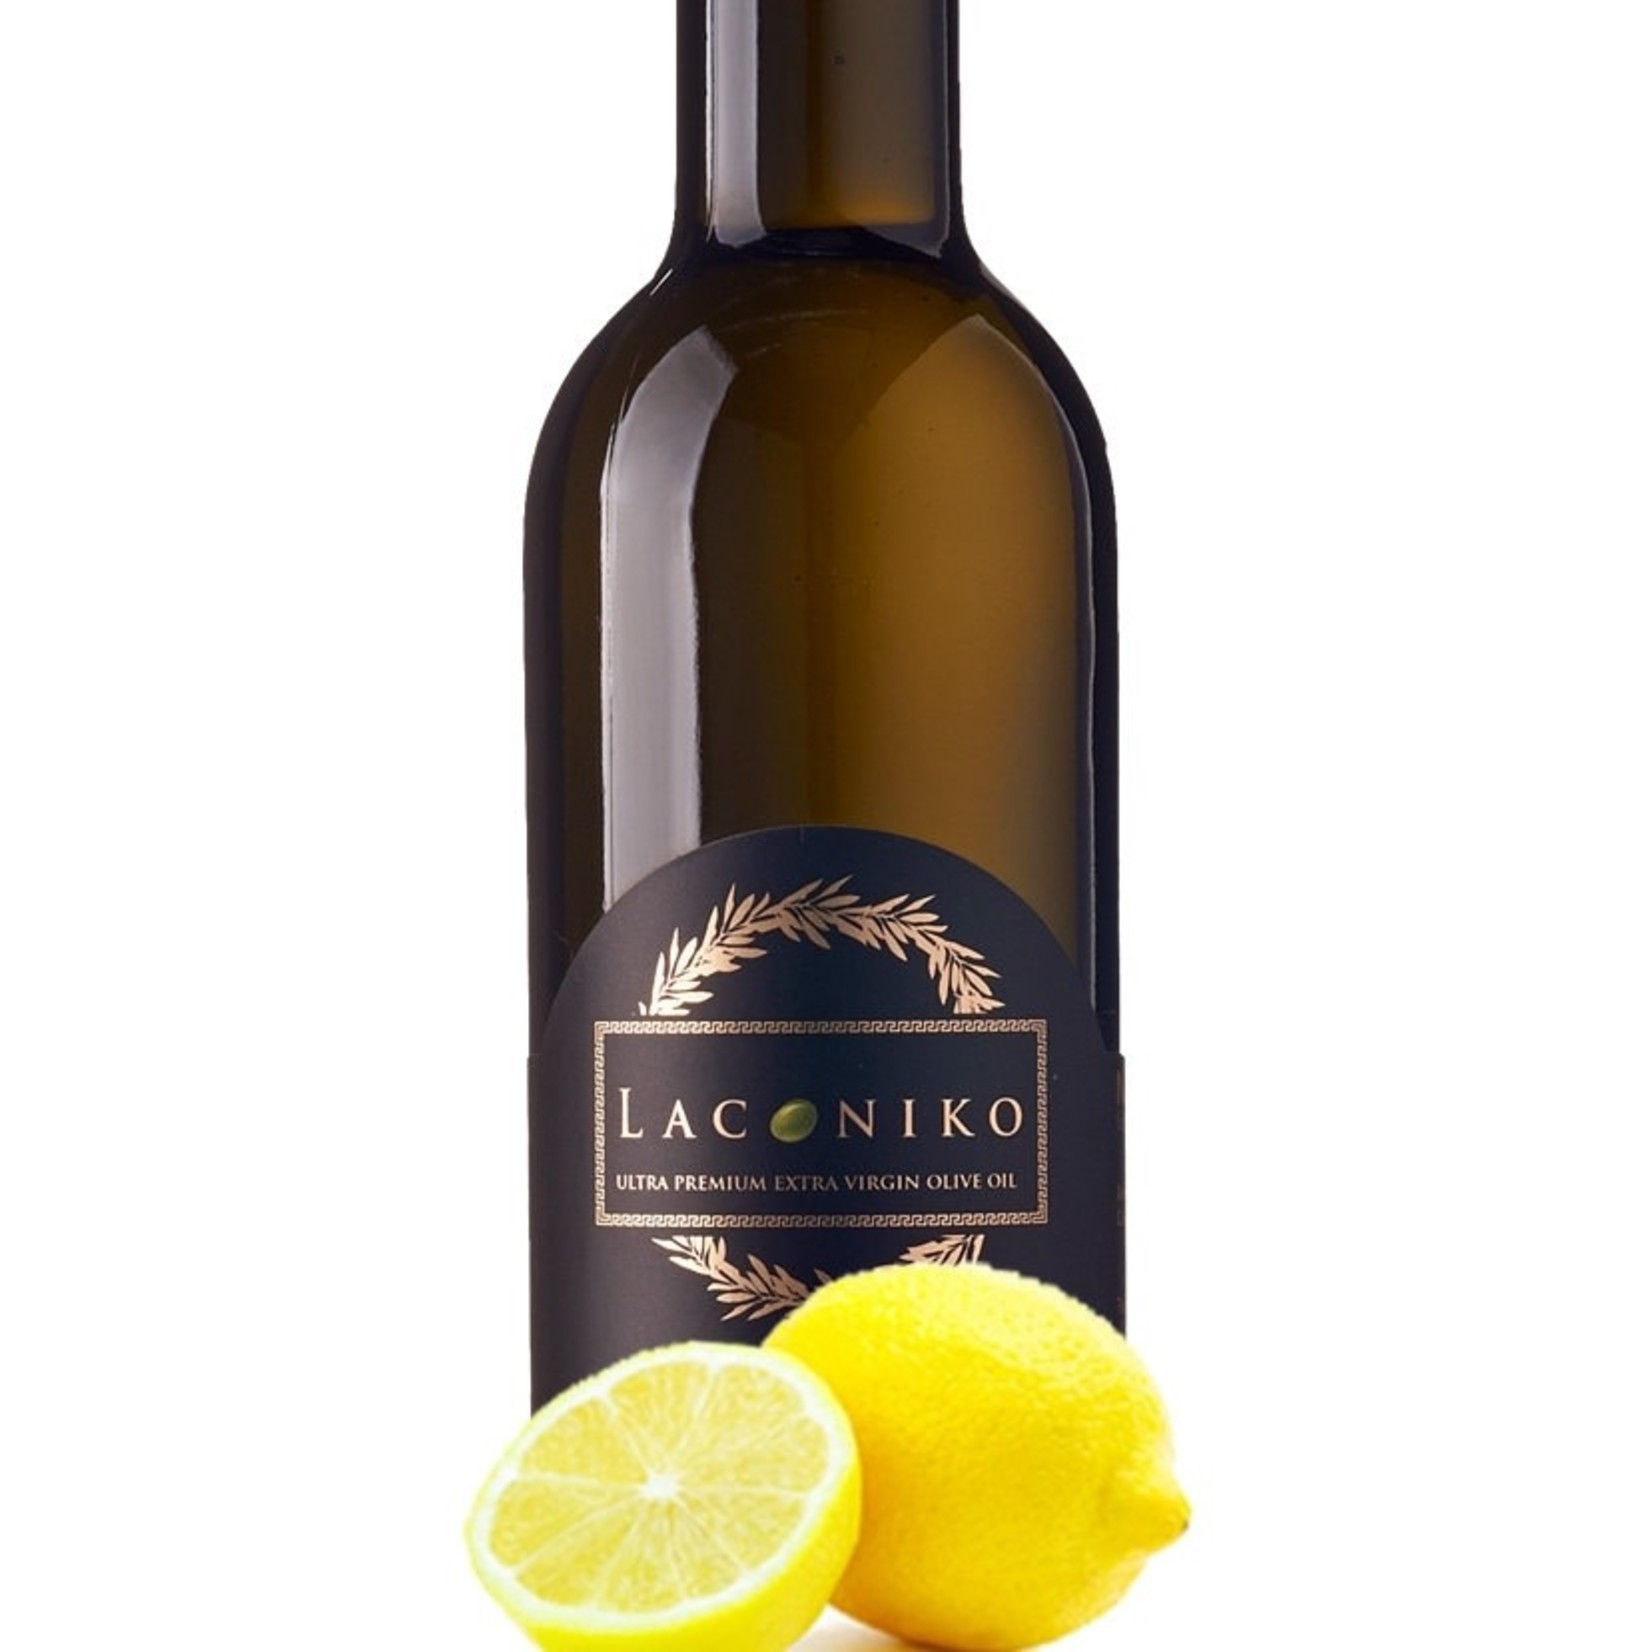 Laconiko Meyer Lemon Extra Virgin Olive Oil